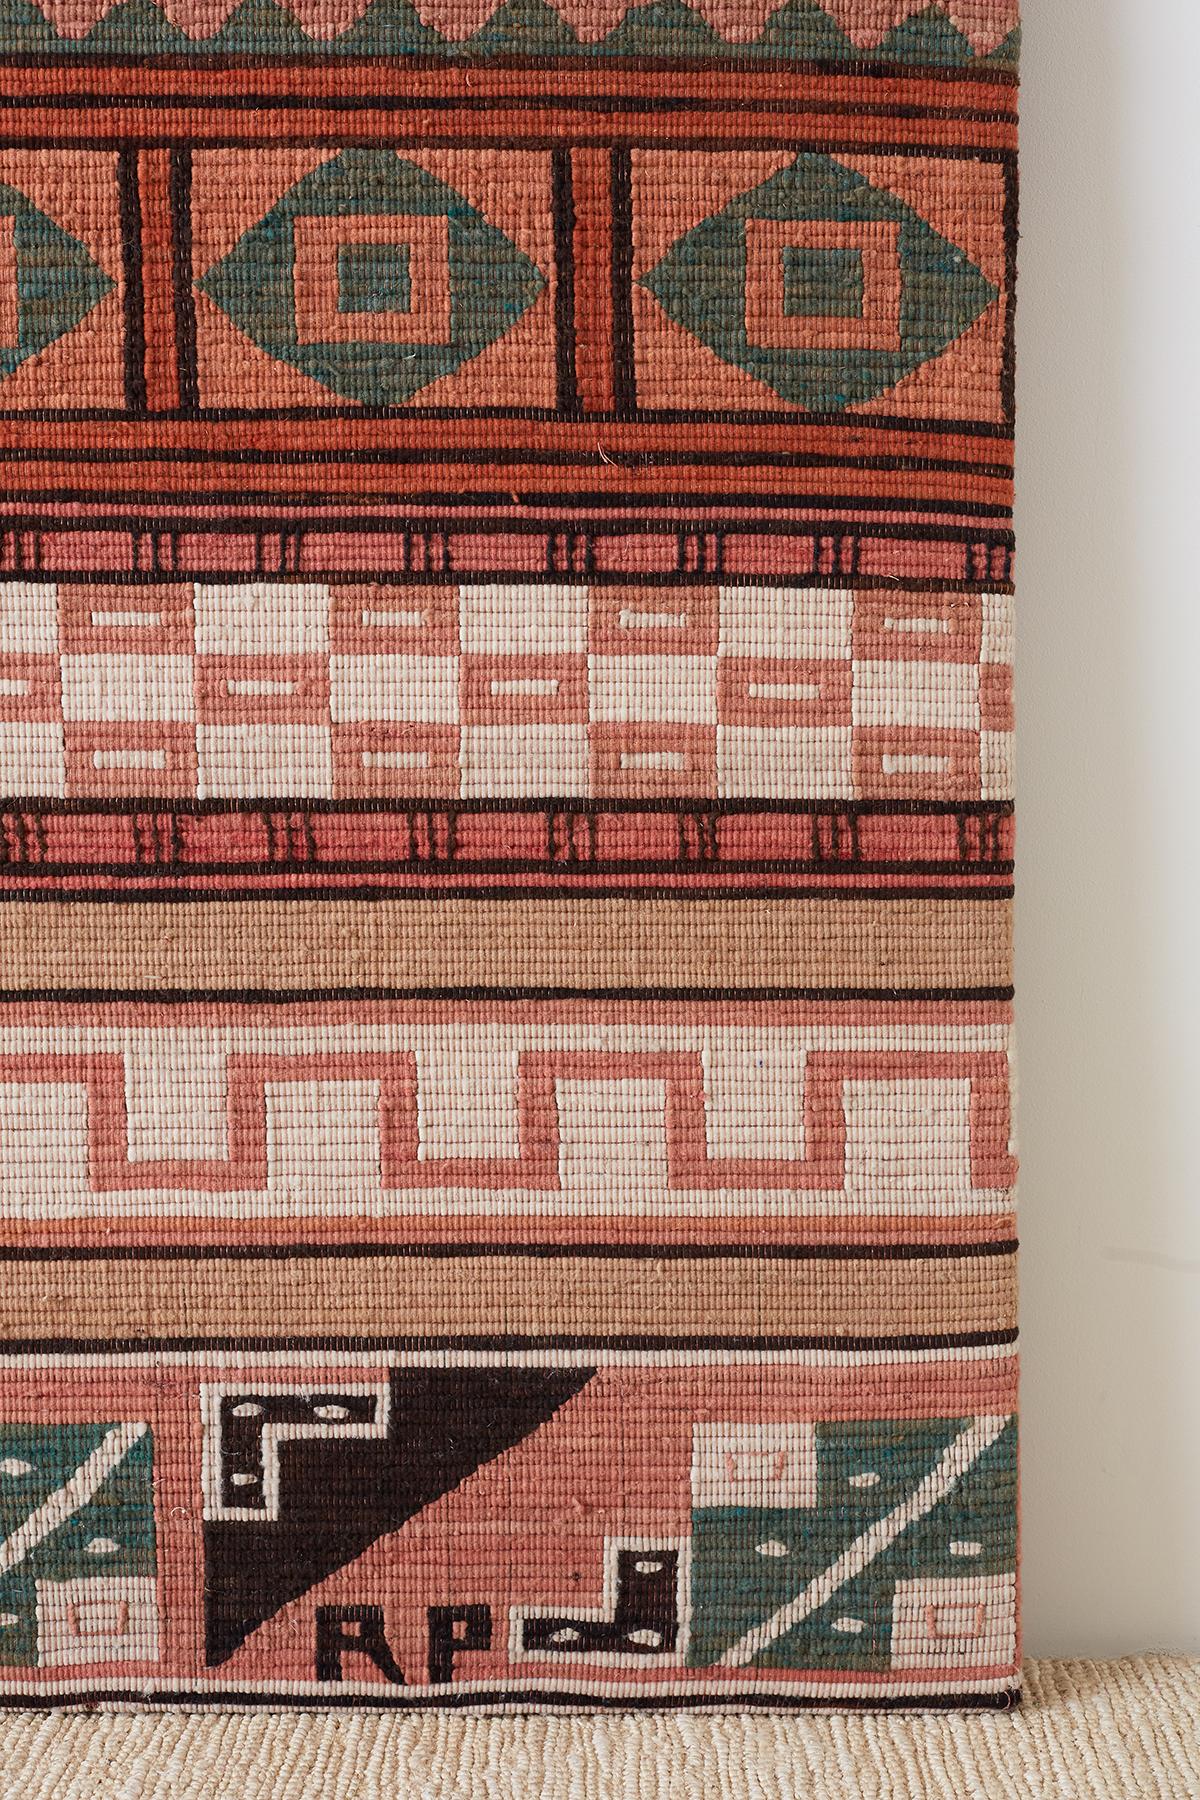 North American Woven Geometric Textile Mounted Panel In Good Condition For Sale In Rio Vista, CA